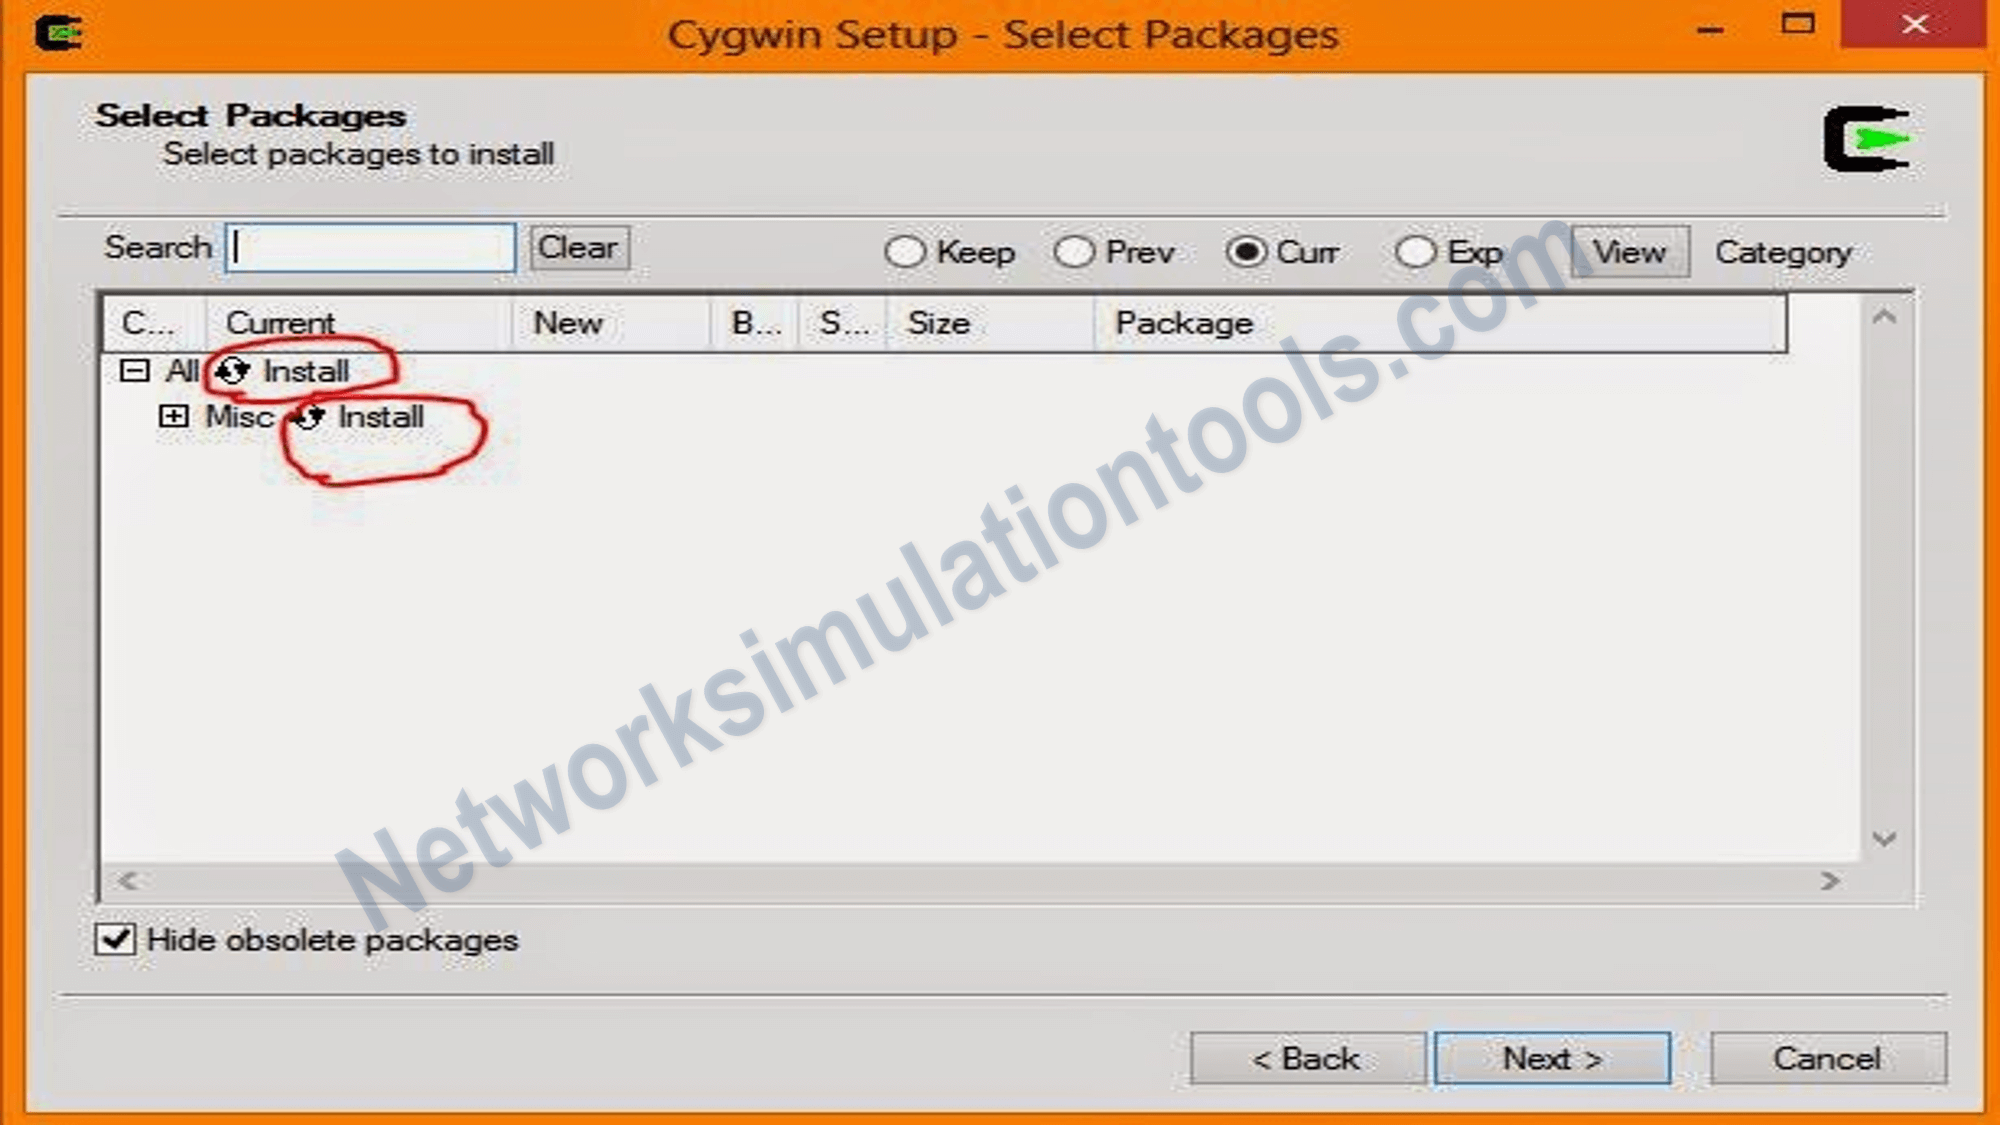 Cygwin Setup installation option